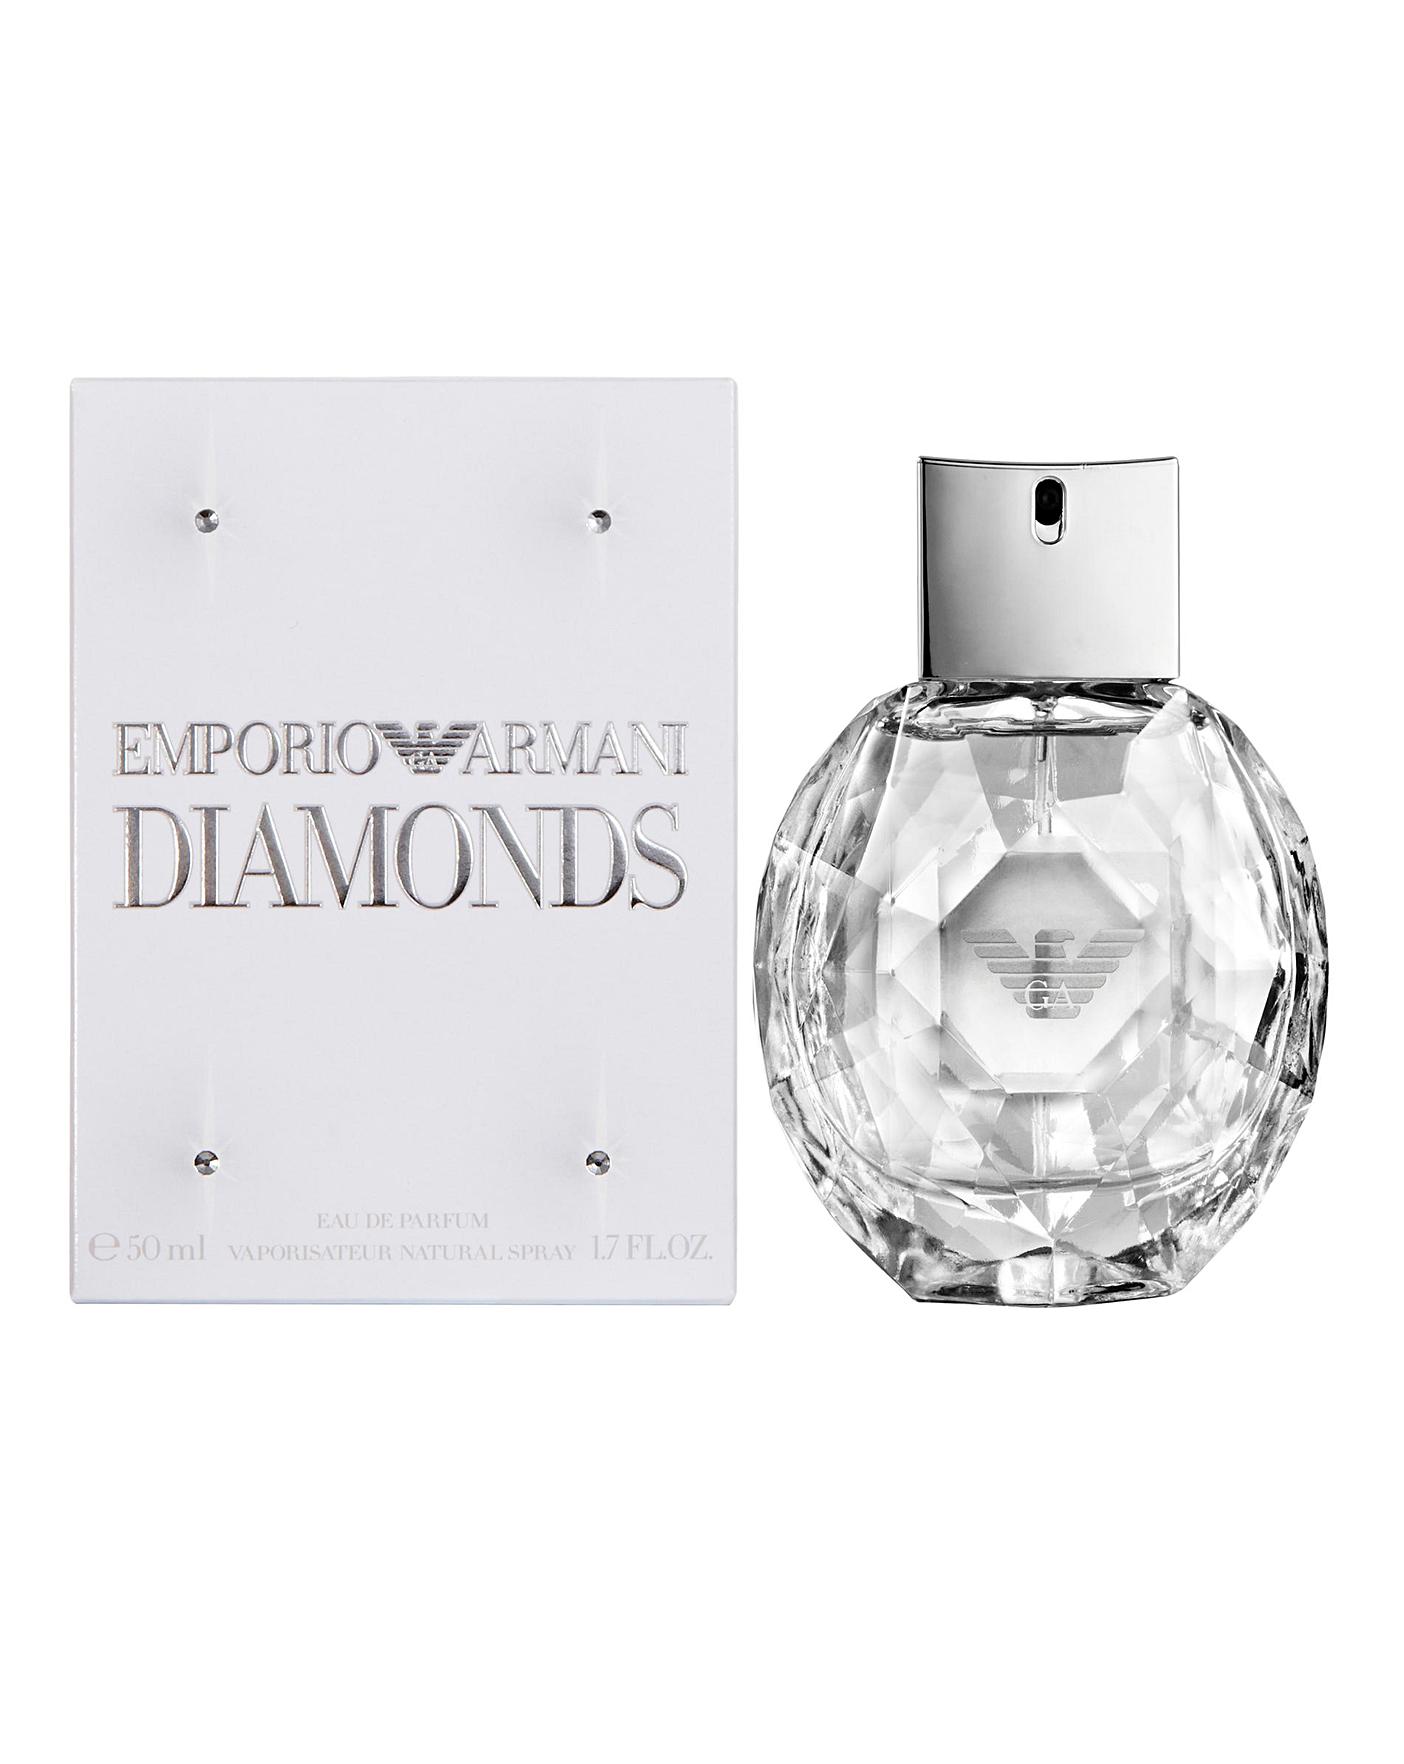 Emporio Armani Diamonds 100ml EDP | J D 